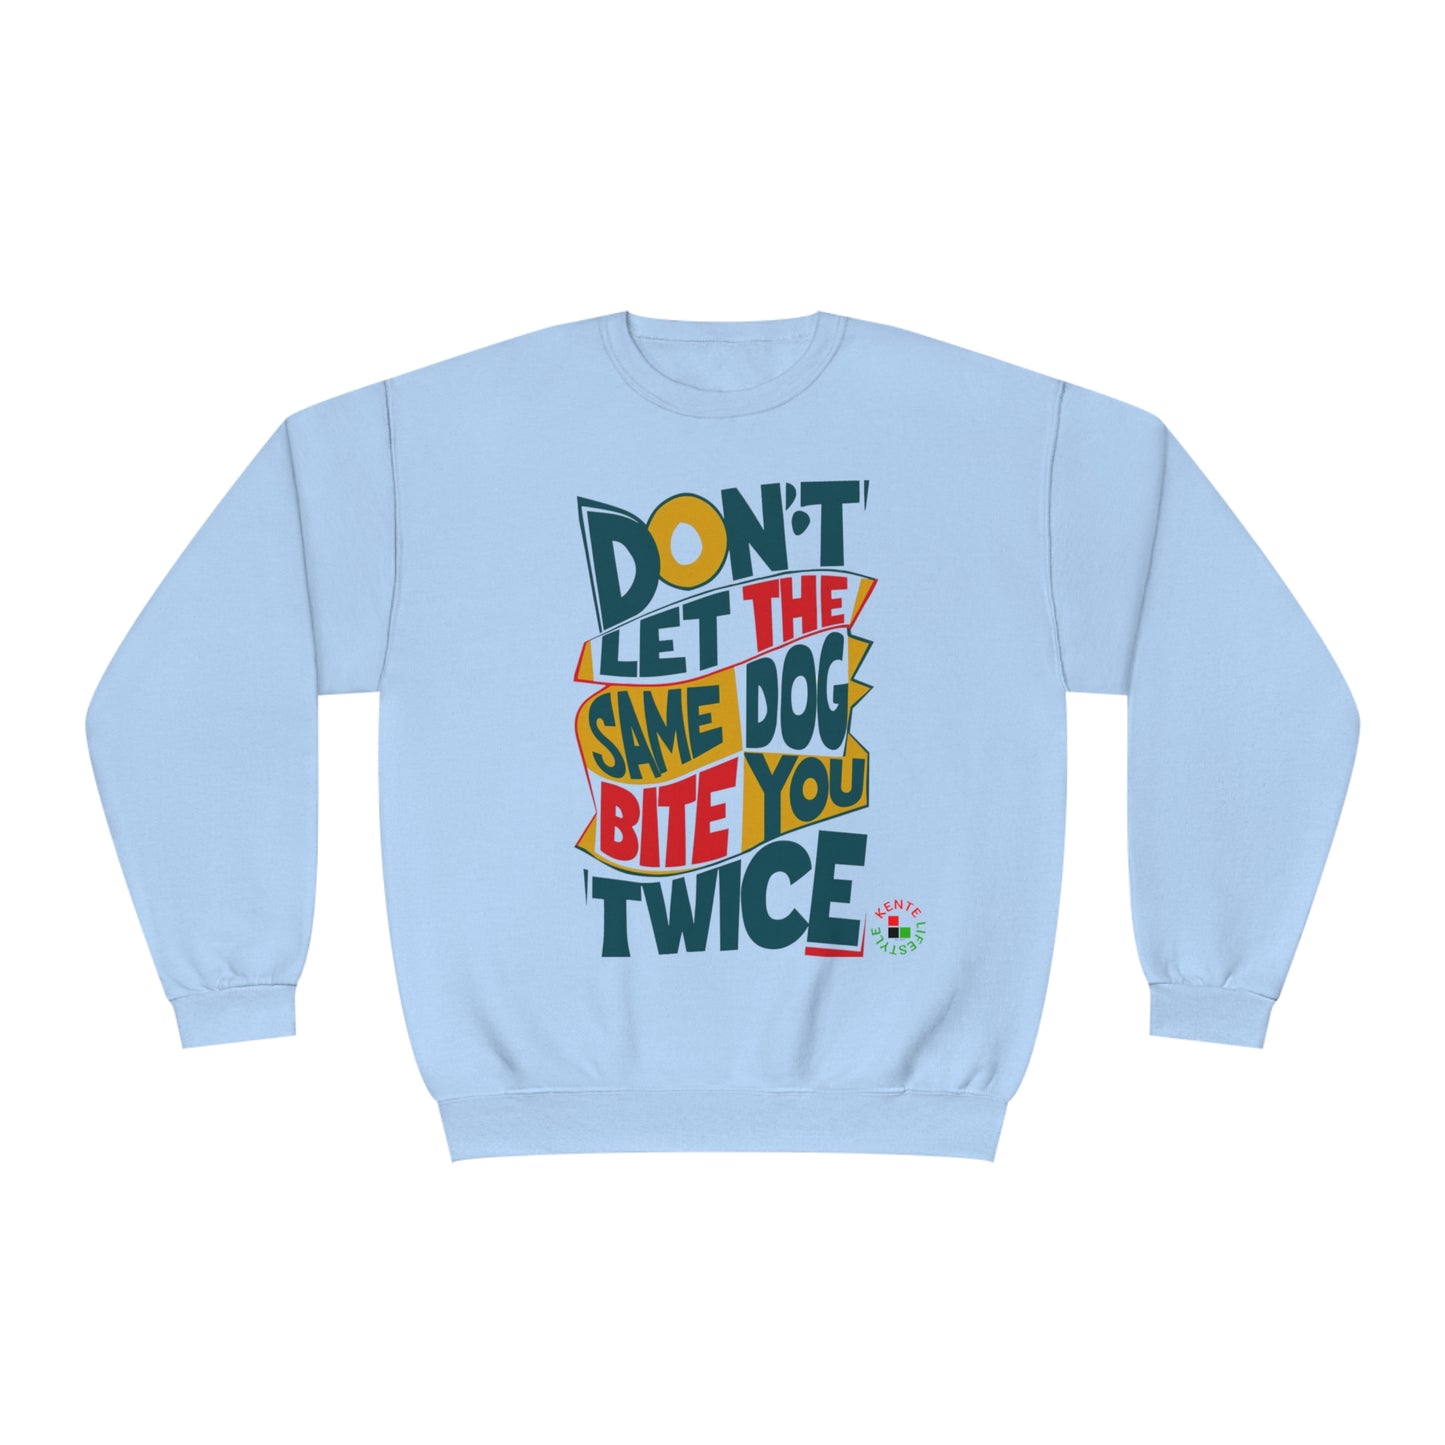 "Don't Let the Same Dog Bite You Twice" - Sweatshirt